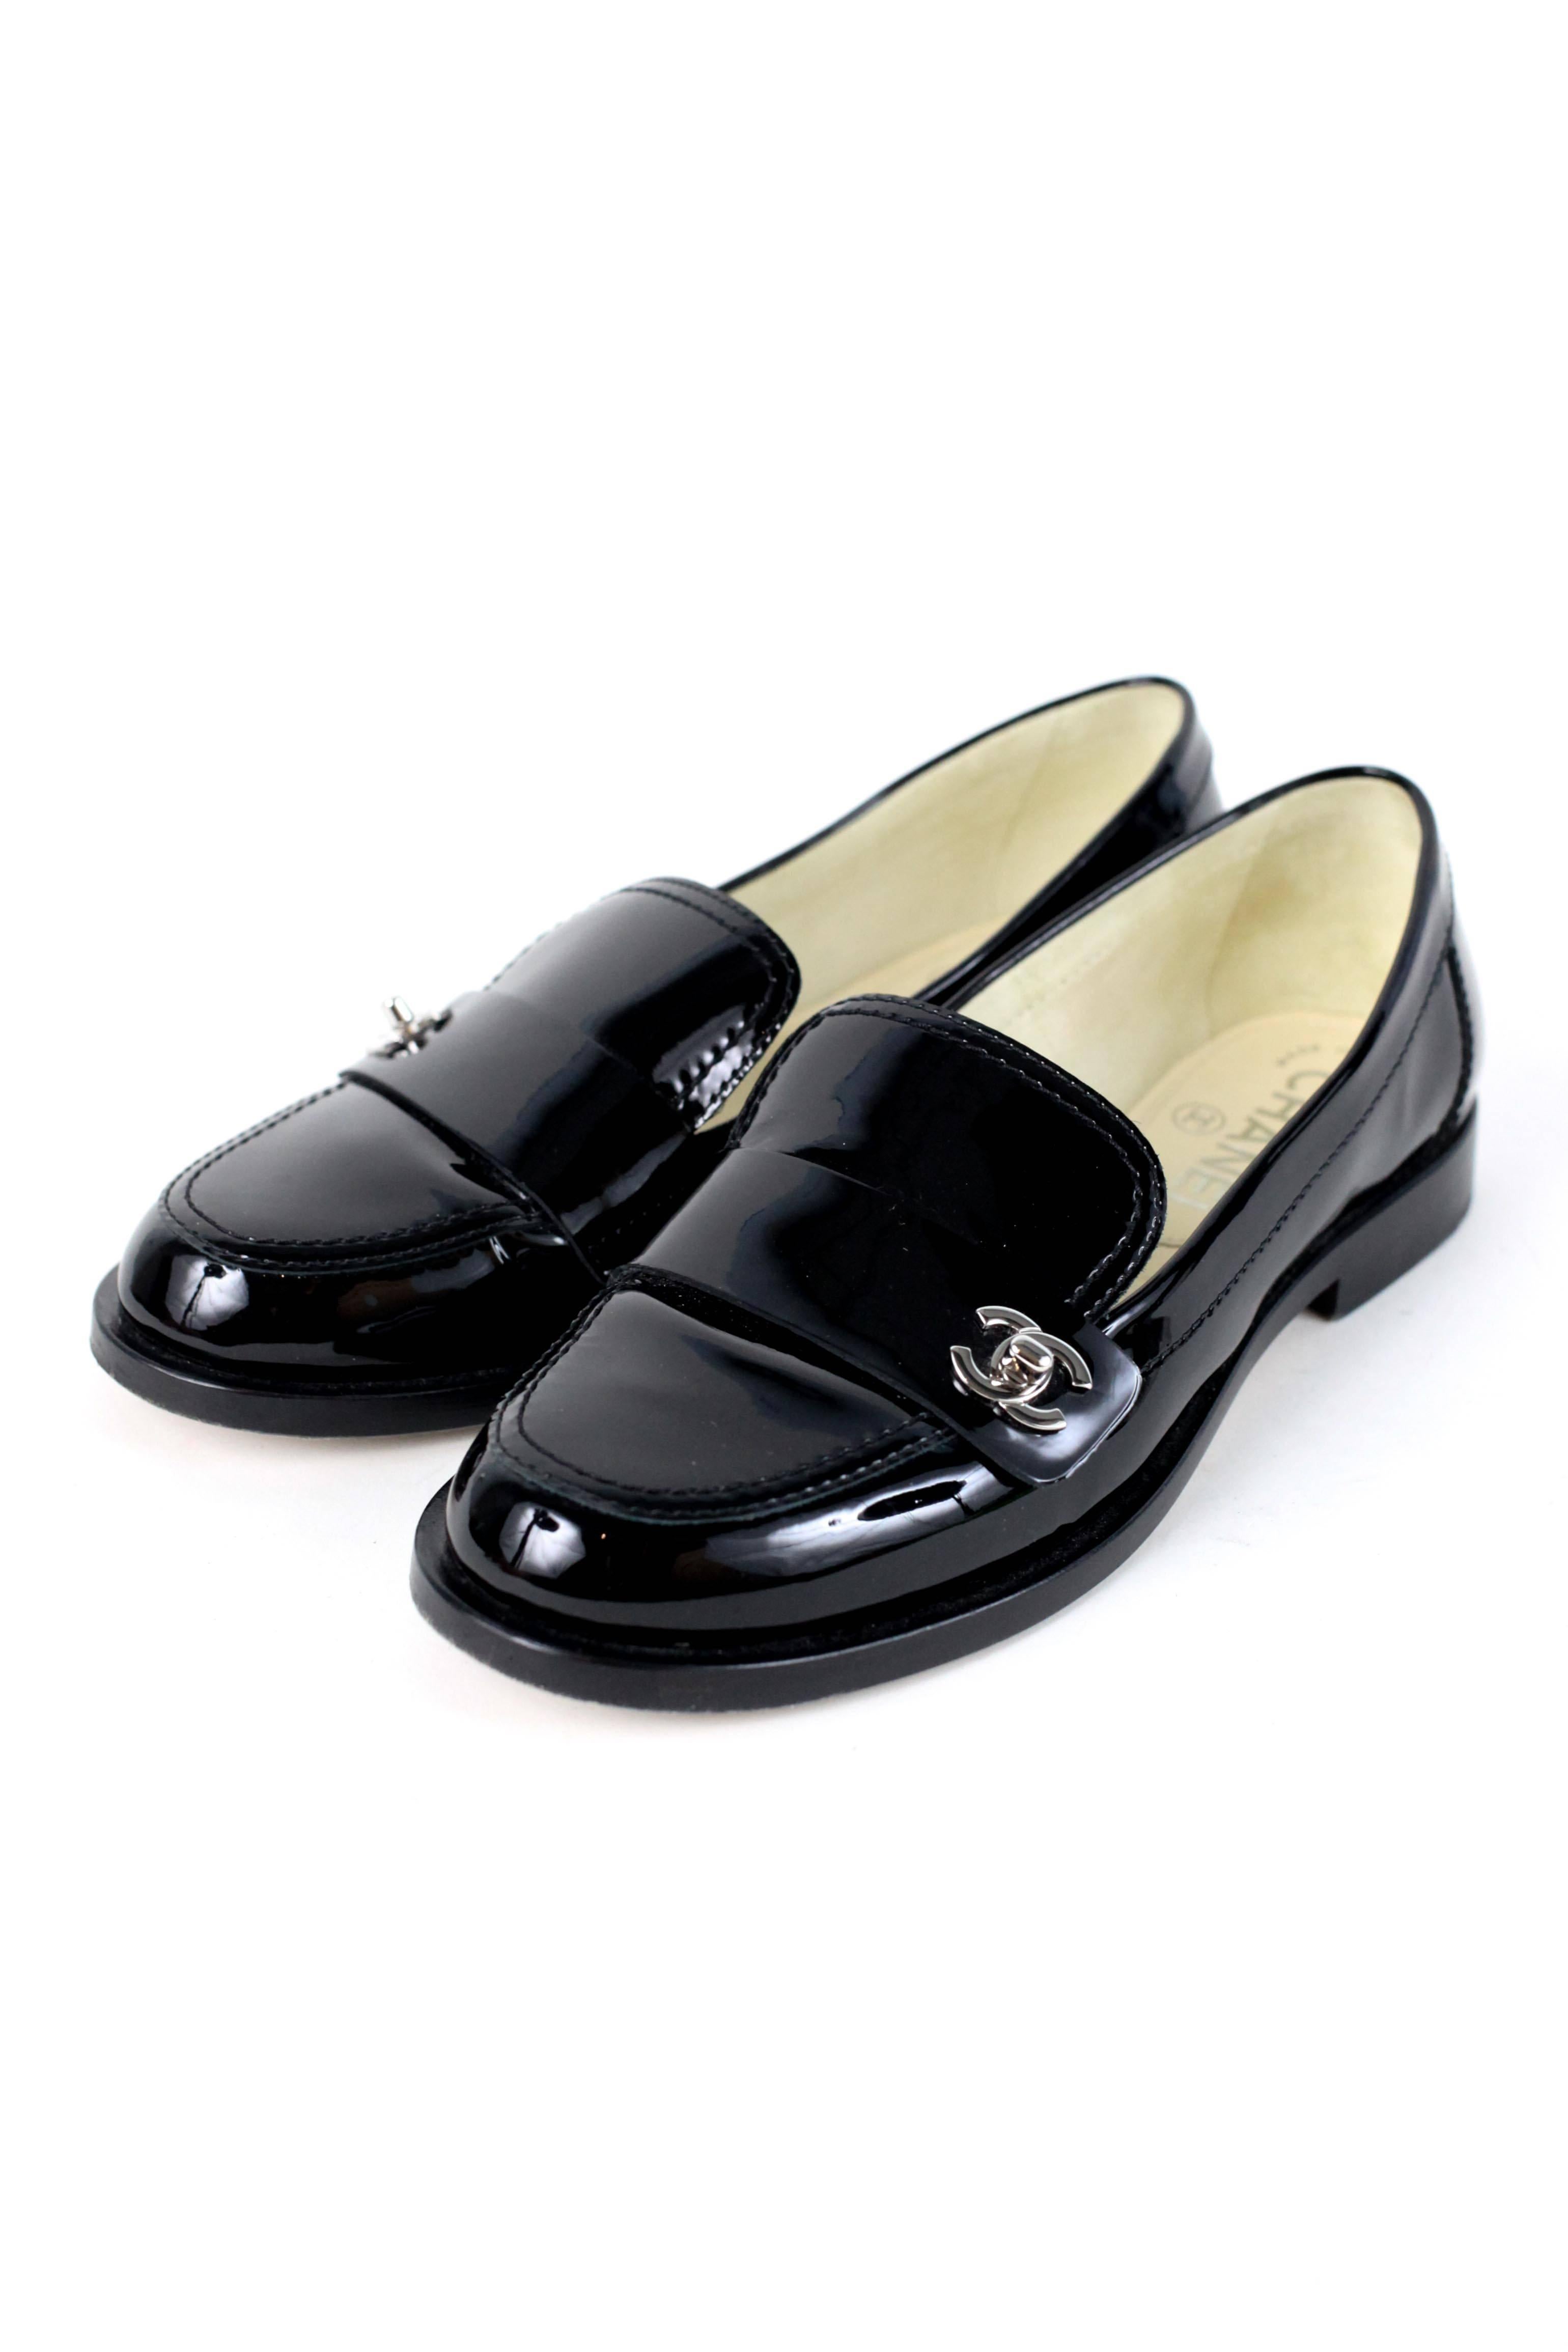 Chanel Loafer Black W/CC 36 1